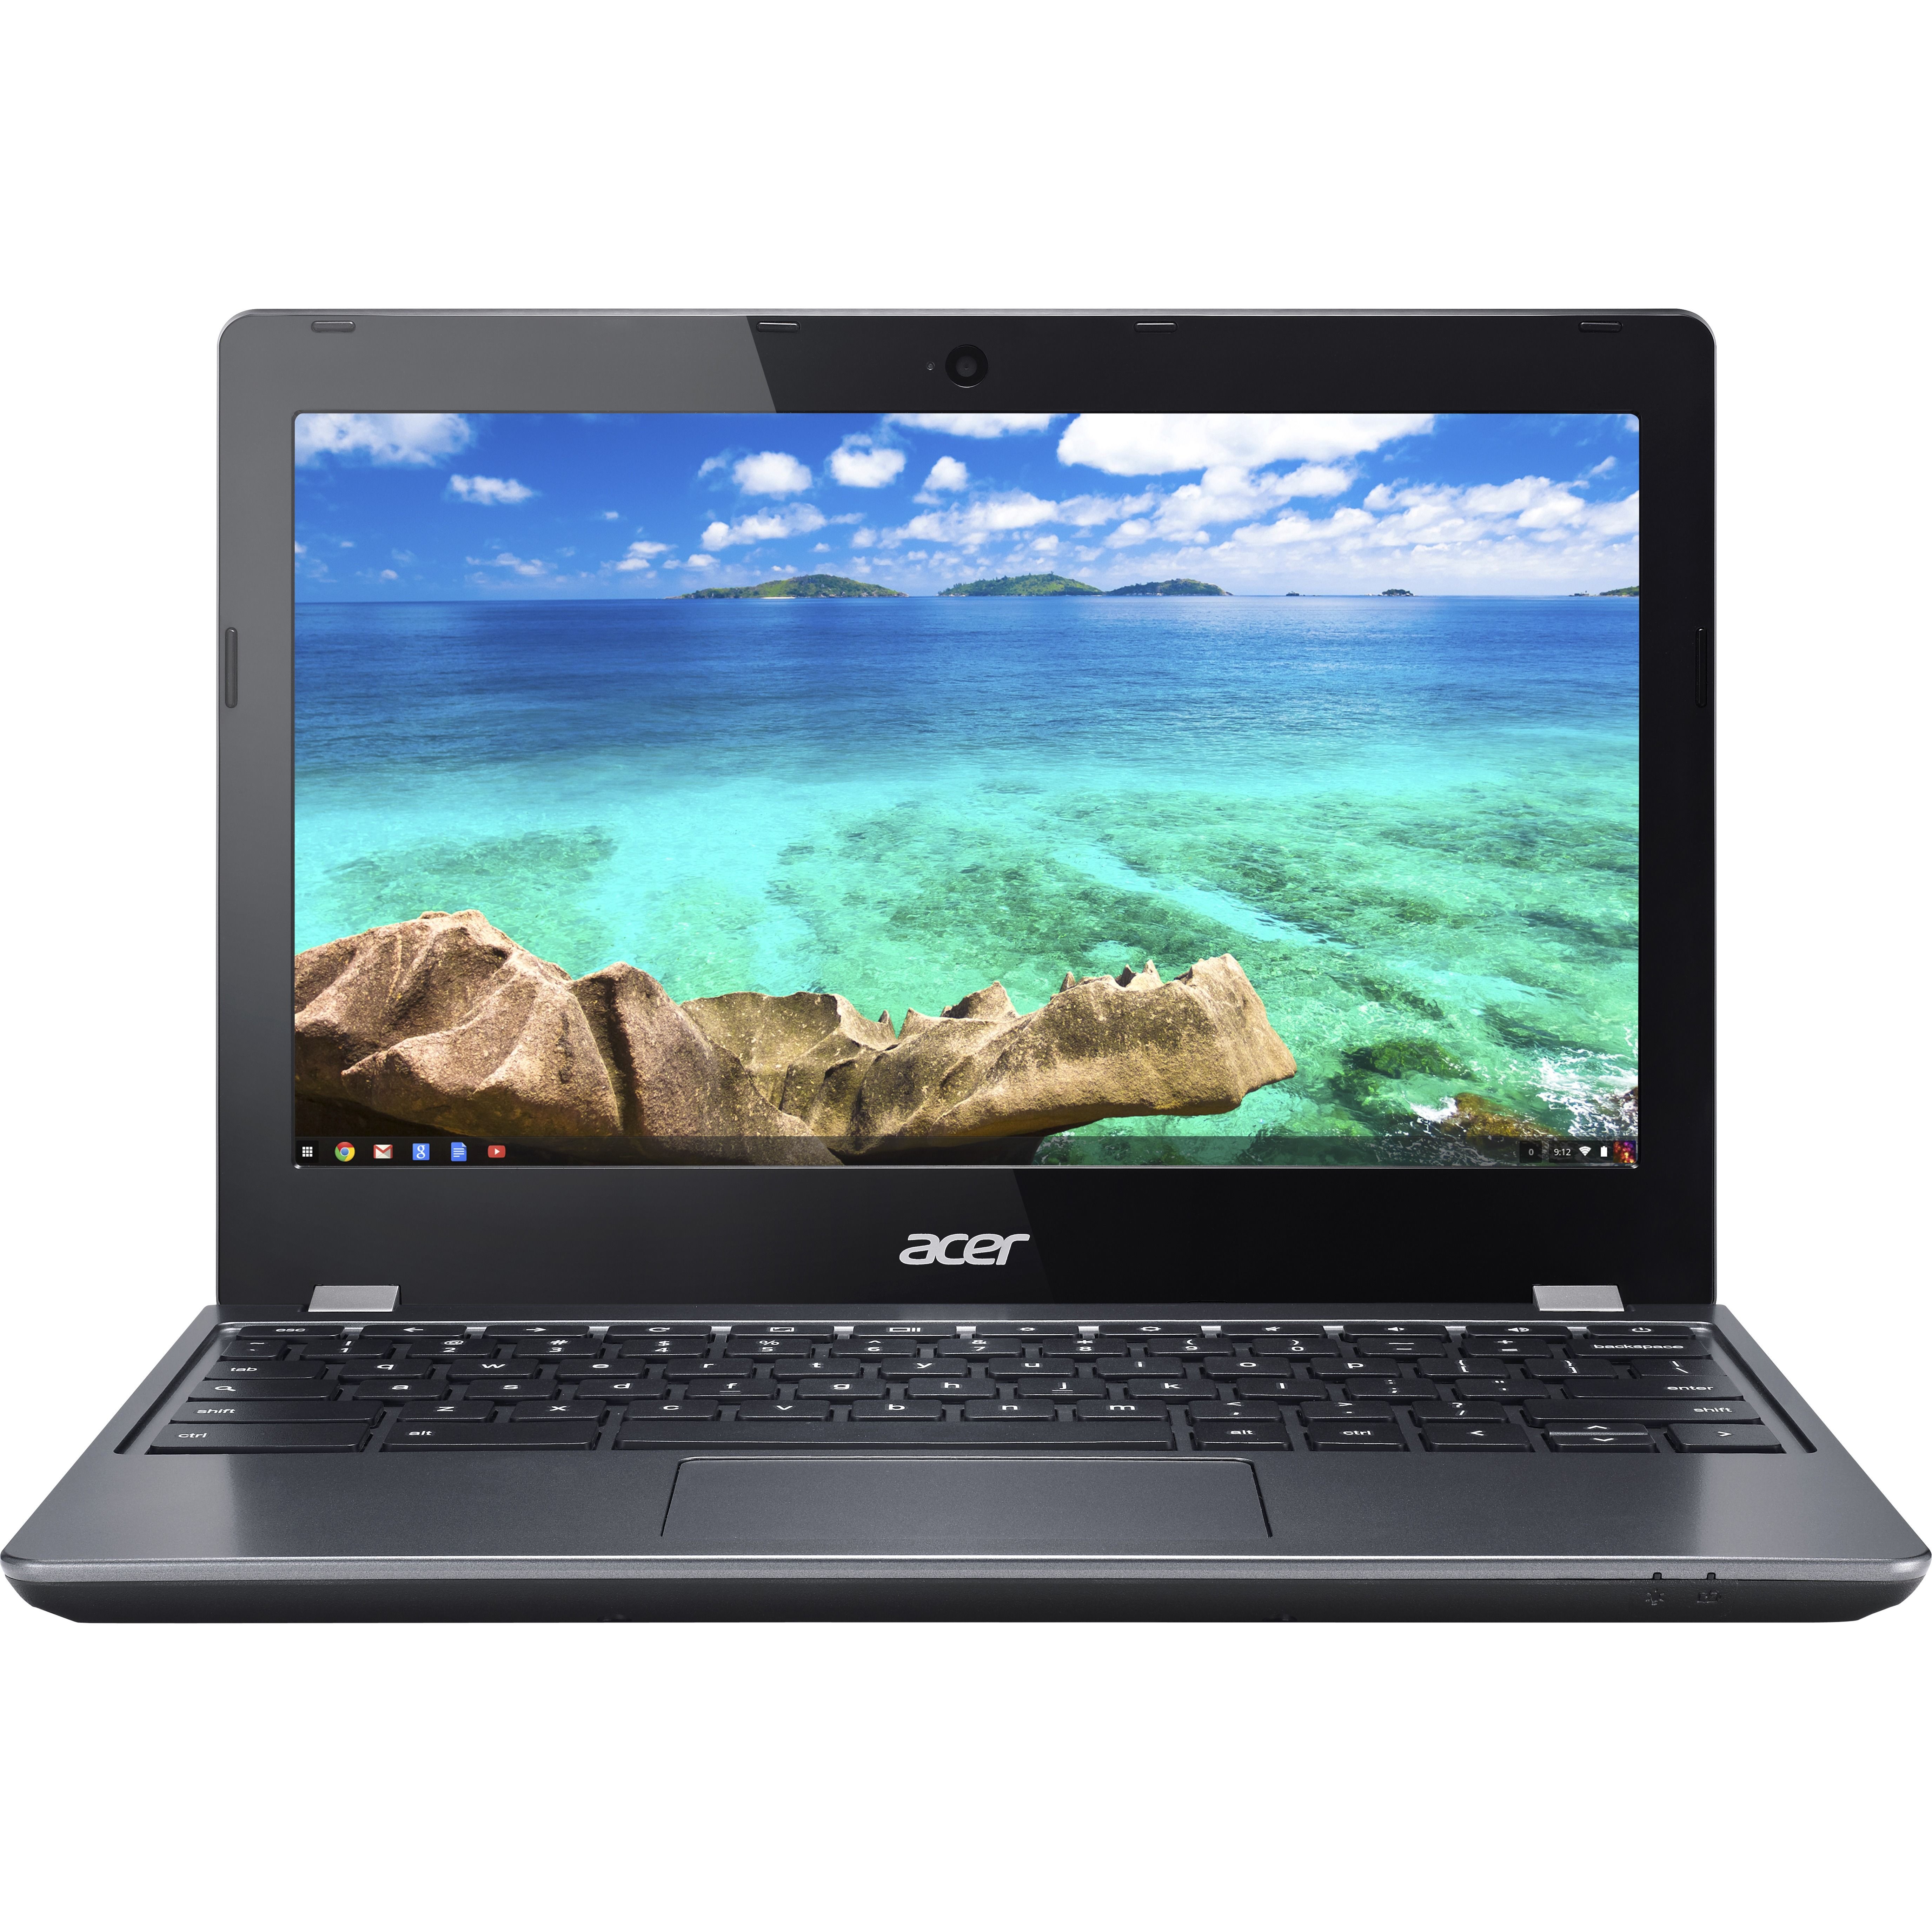 Restored Acer Chromebook 11 C740 Intel Celeron 1.7 GHz 4GB Ram 16GB Chrome OS (Refurbished) - image 1 of 1